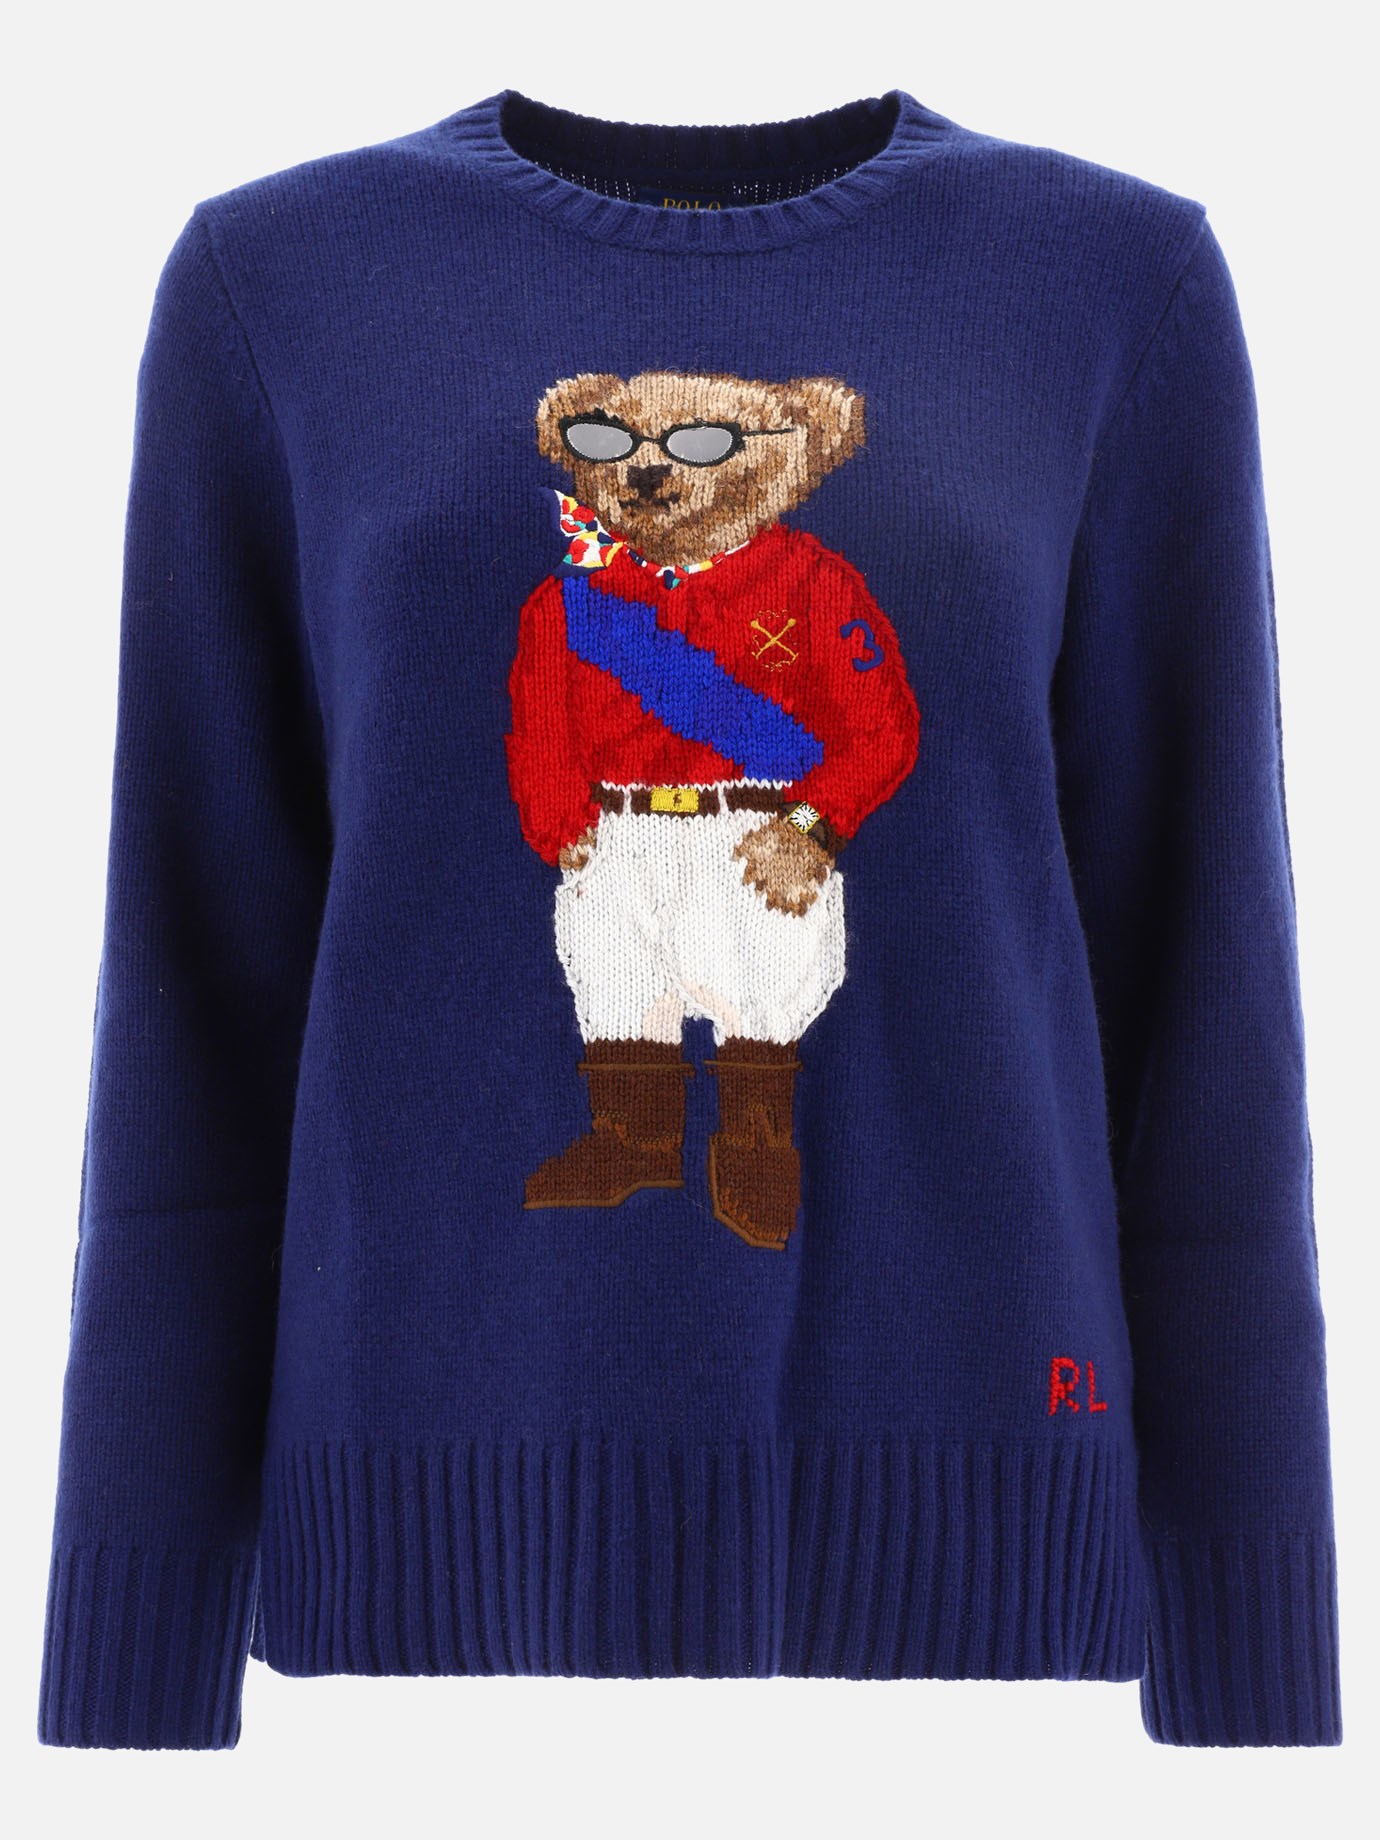  Polo Bear  sweaterby Polo Ralph Lauren - 0